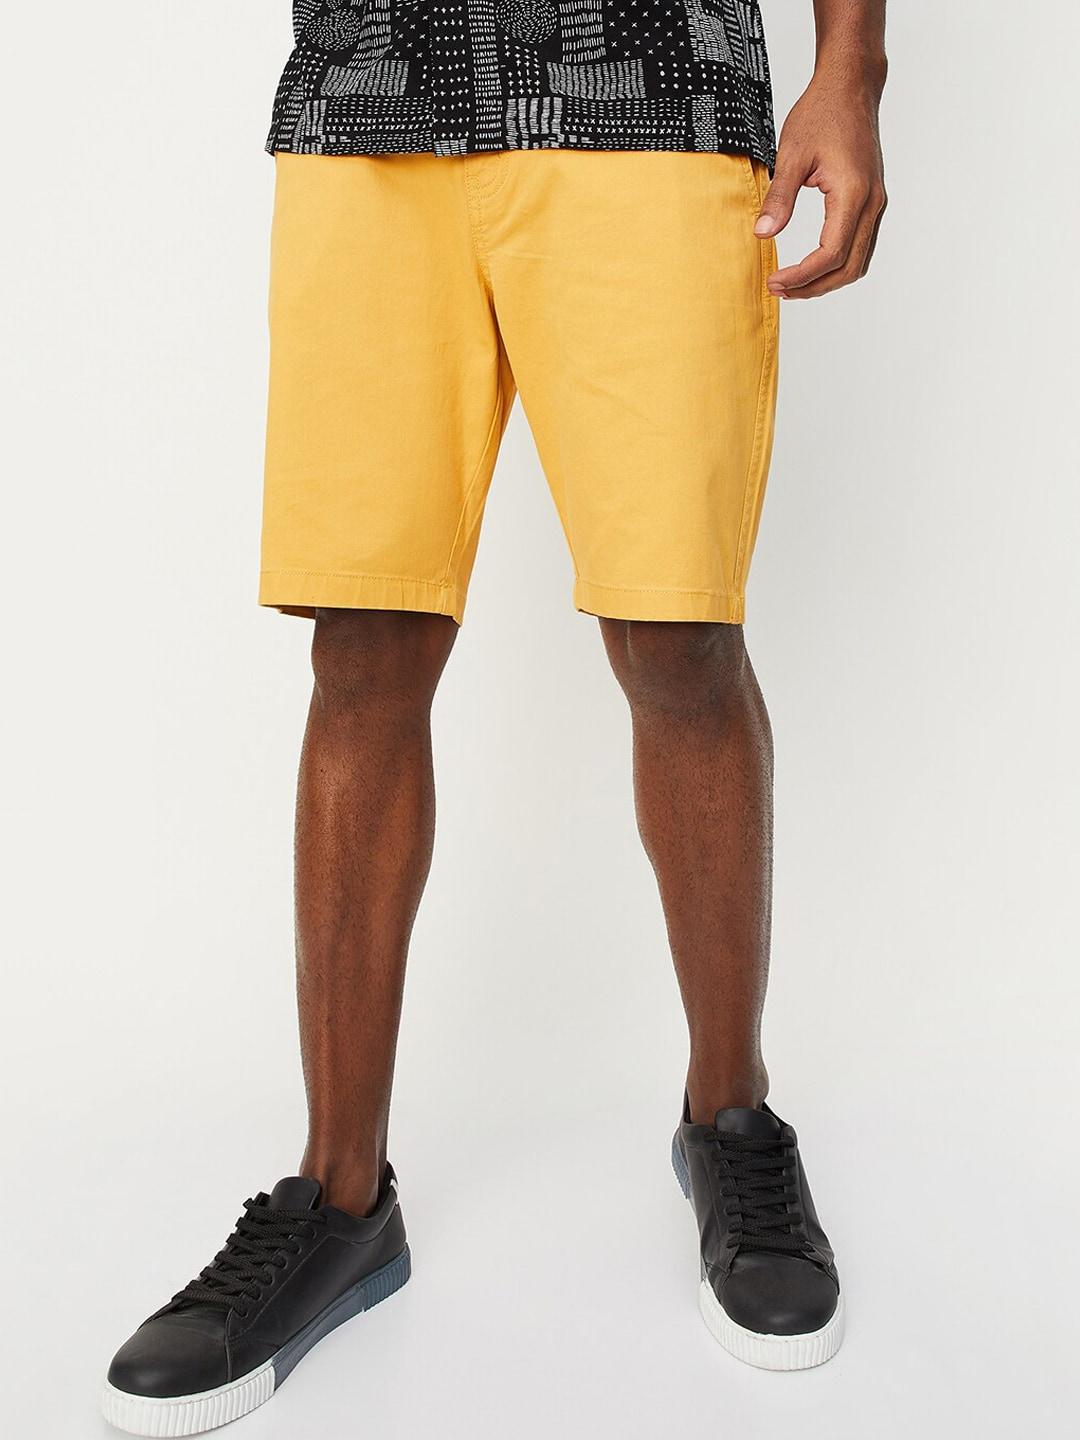 max-men-yellow-shorts